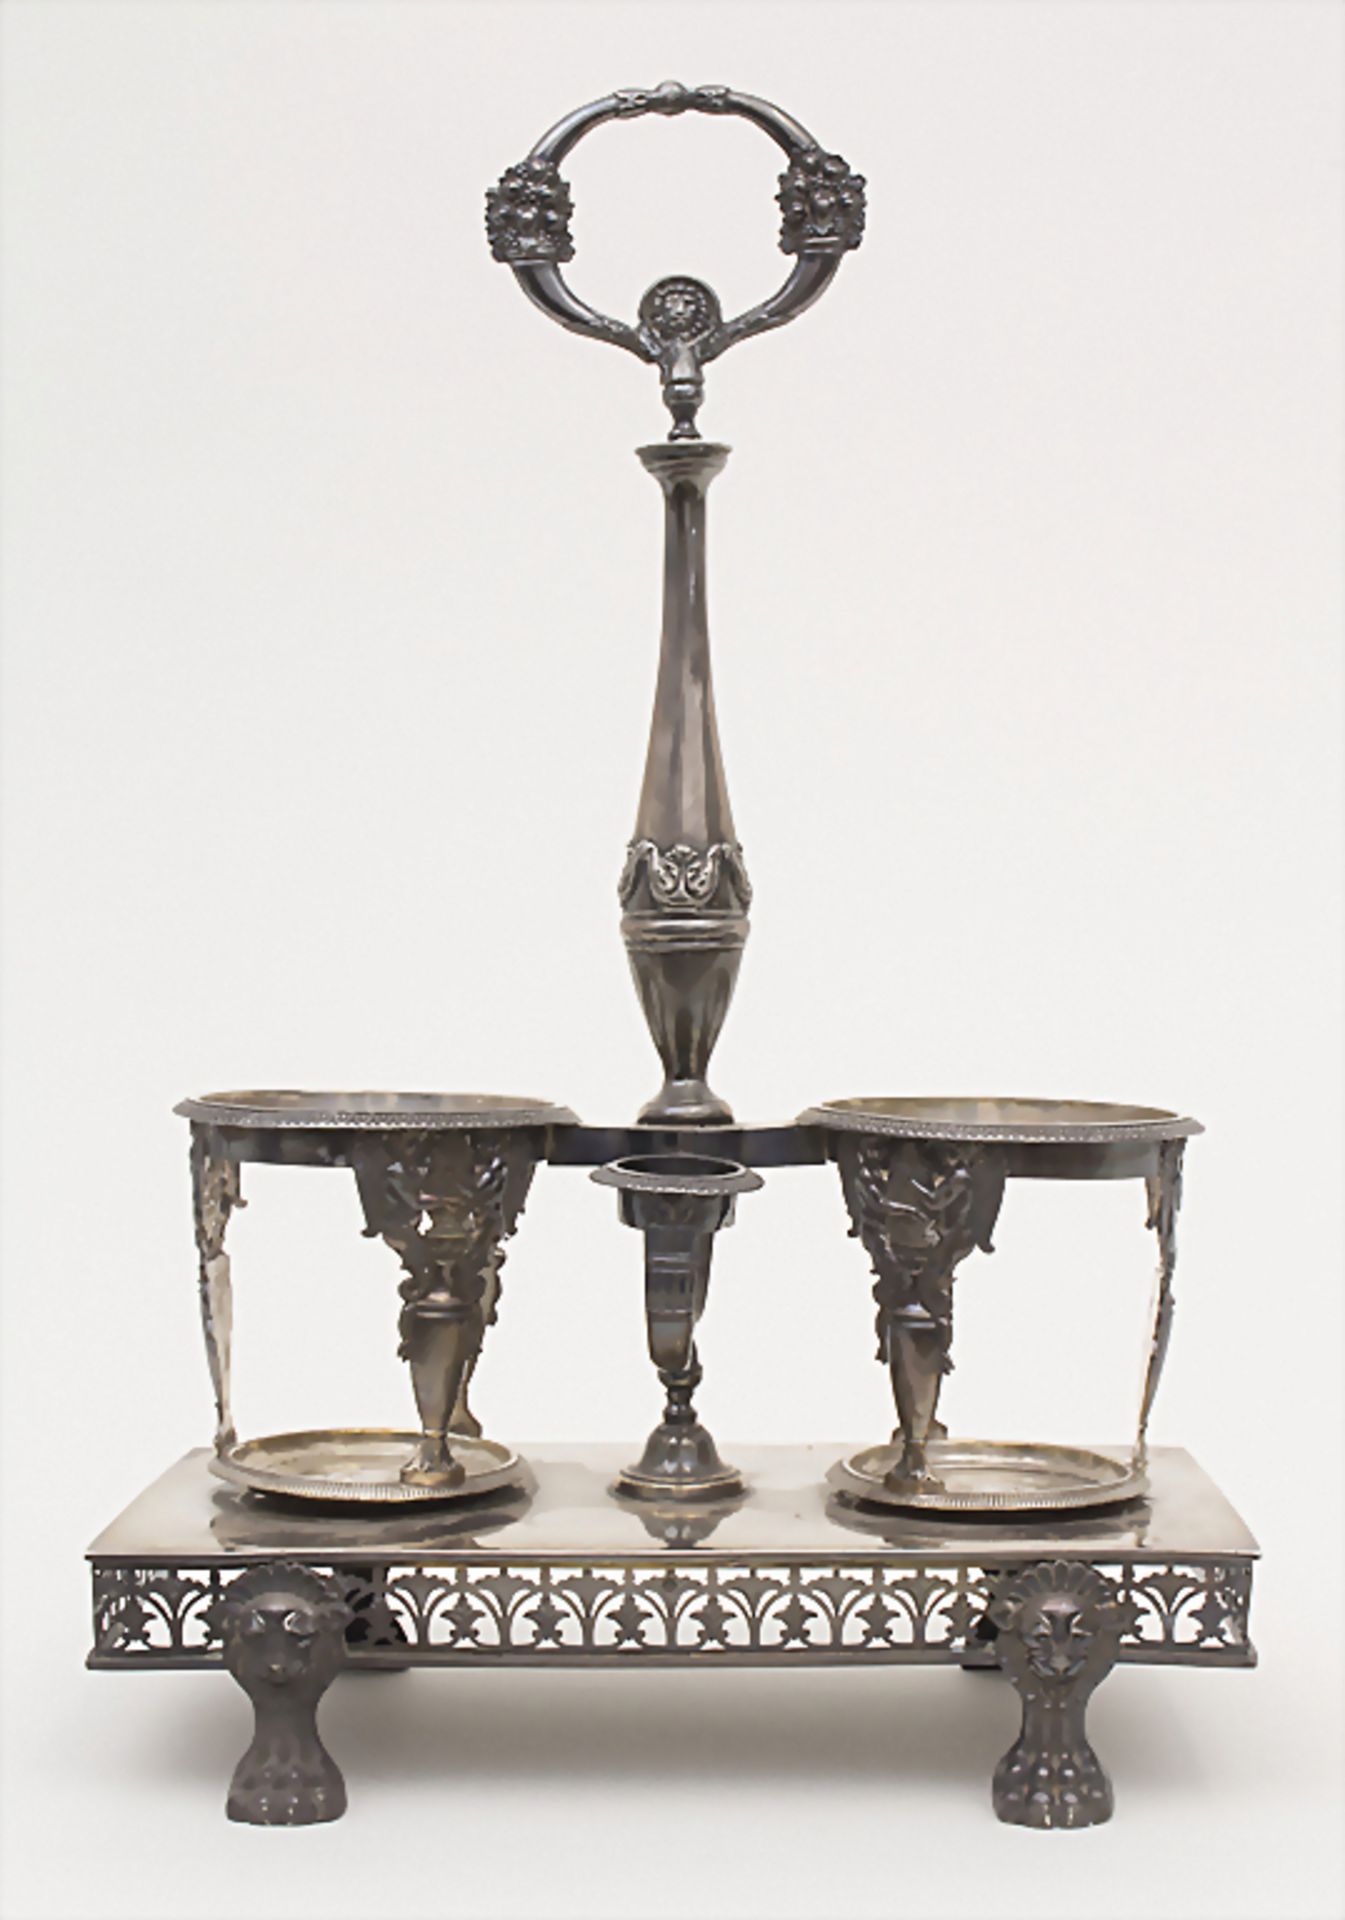 Empire-Menage / A silver cruet stand, Meister Jean-Pierre Bibron, Paris, 1803-1809Mate